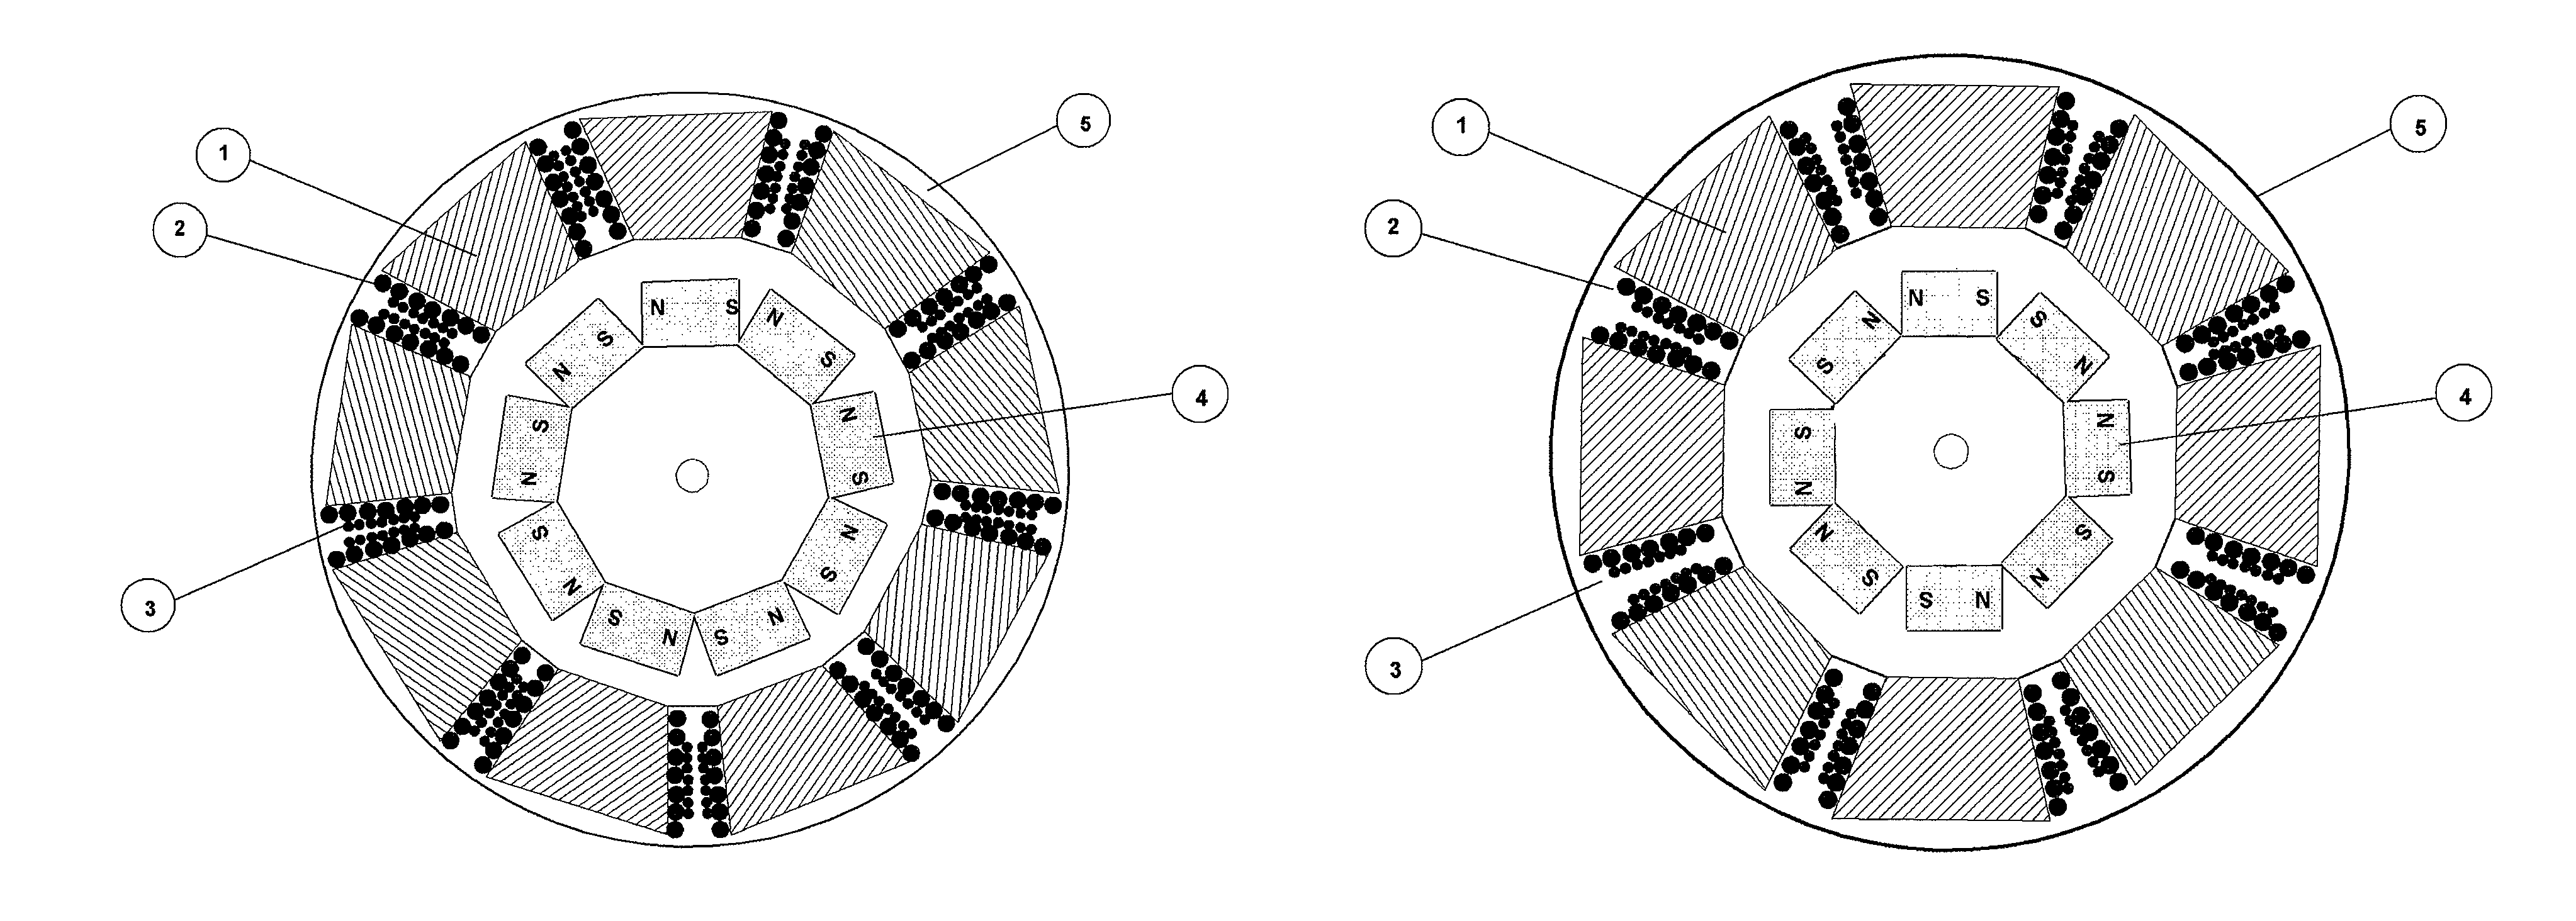 Superconducting rotary motor